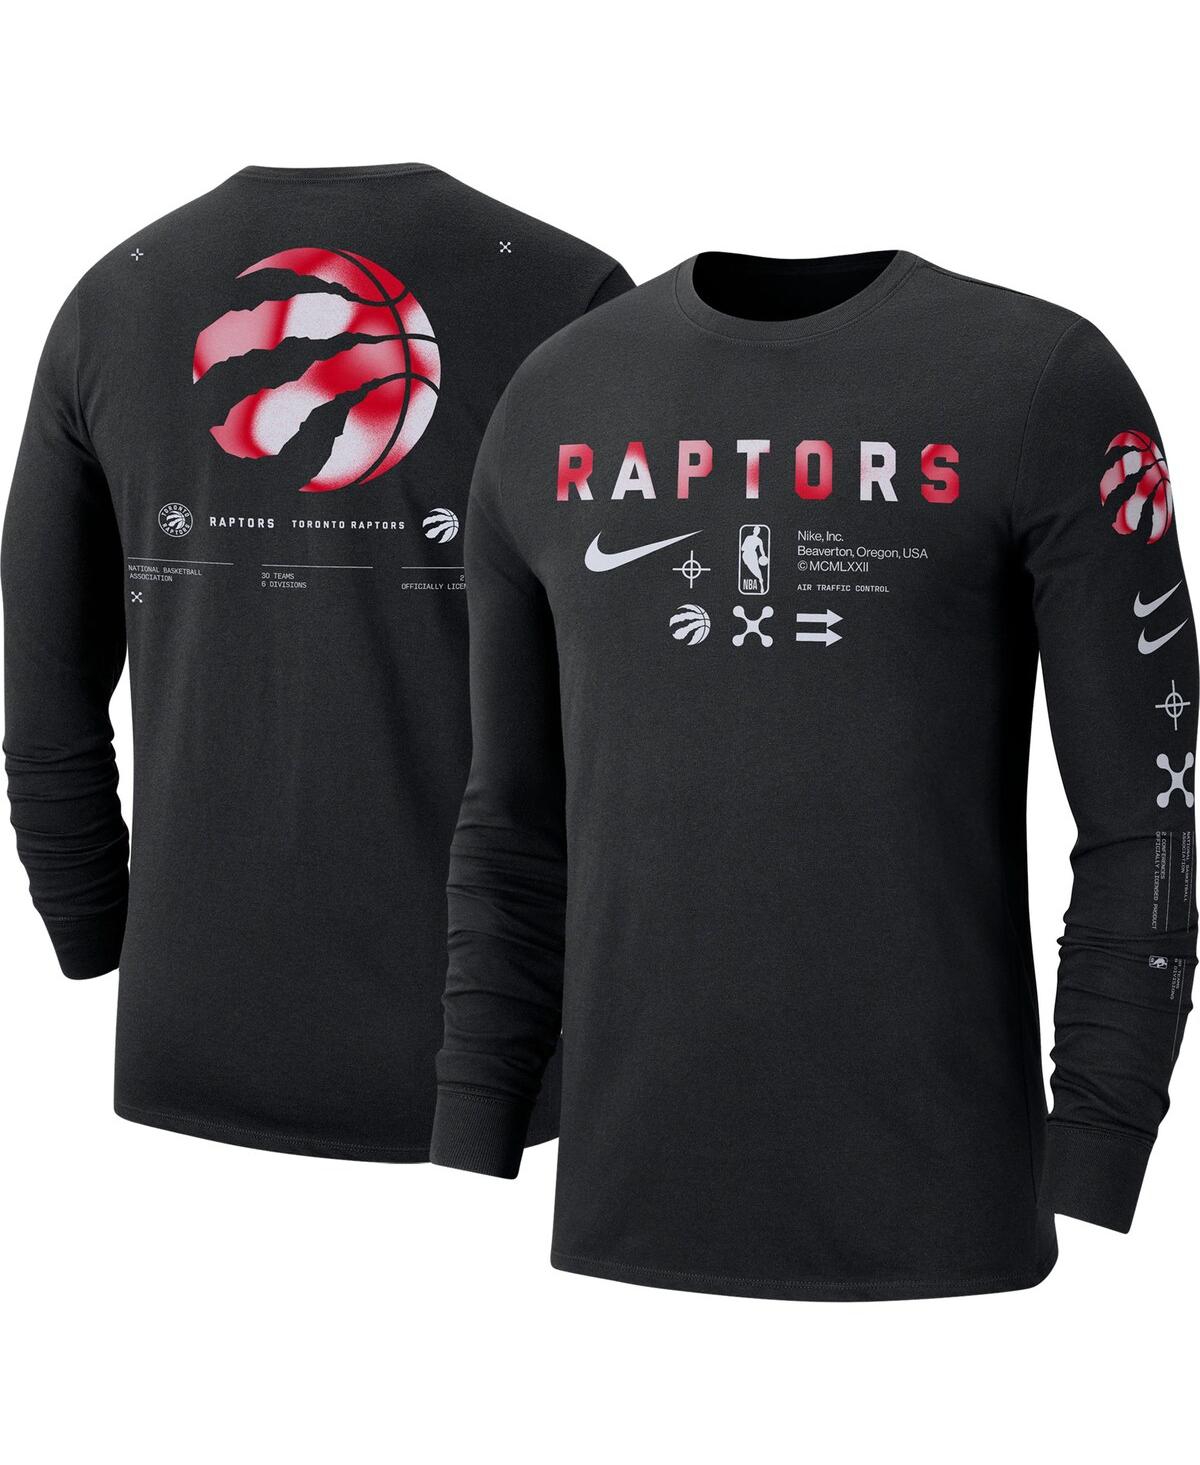 Nike Men's  Black Toronto Raptors Essential Air Traffic Control Long Sleeve T-shirt